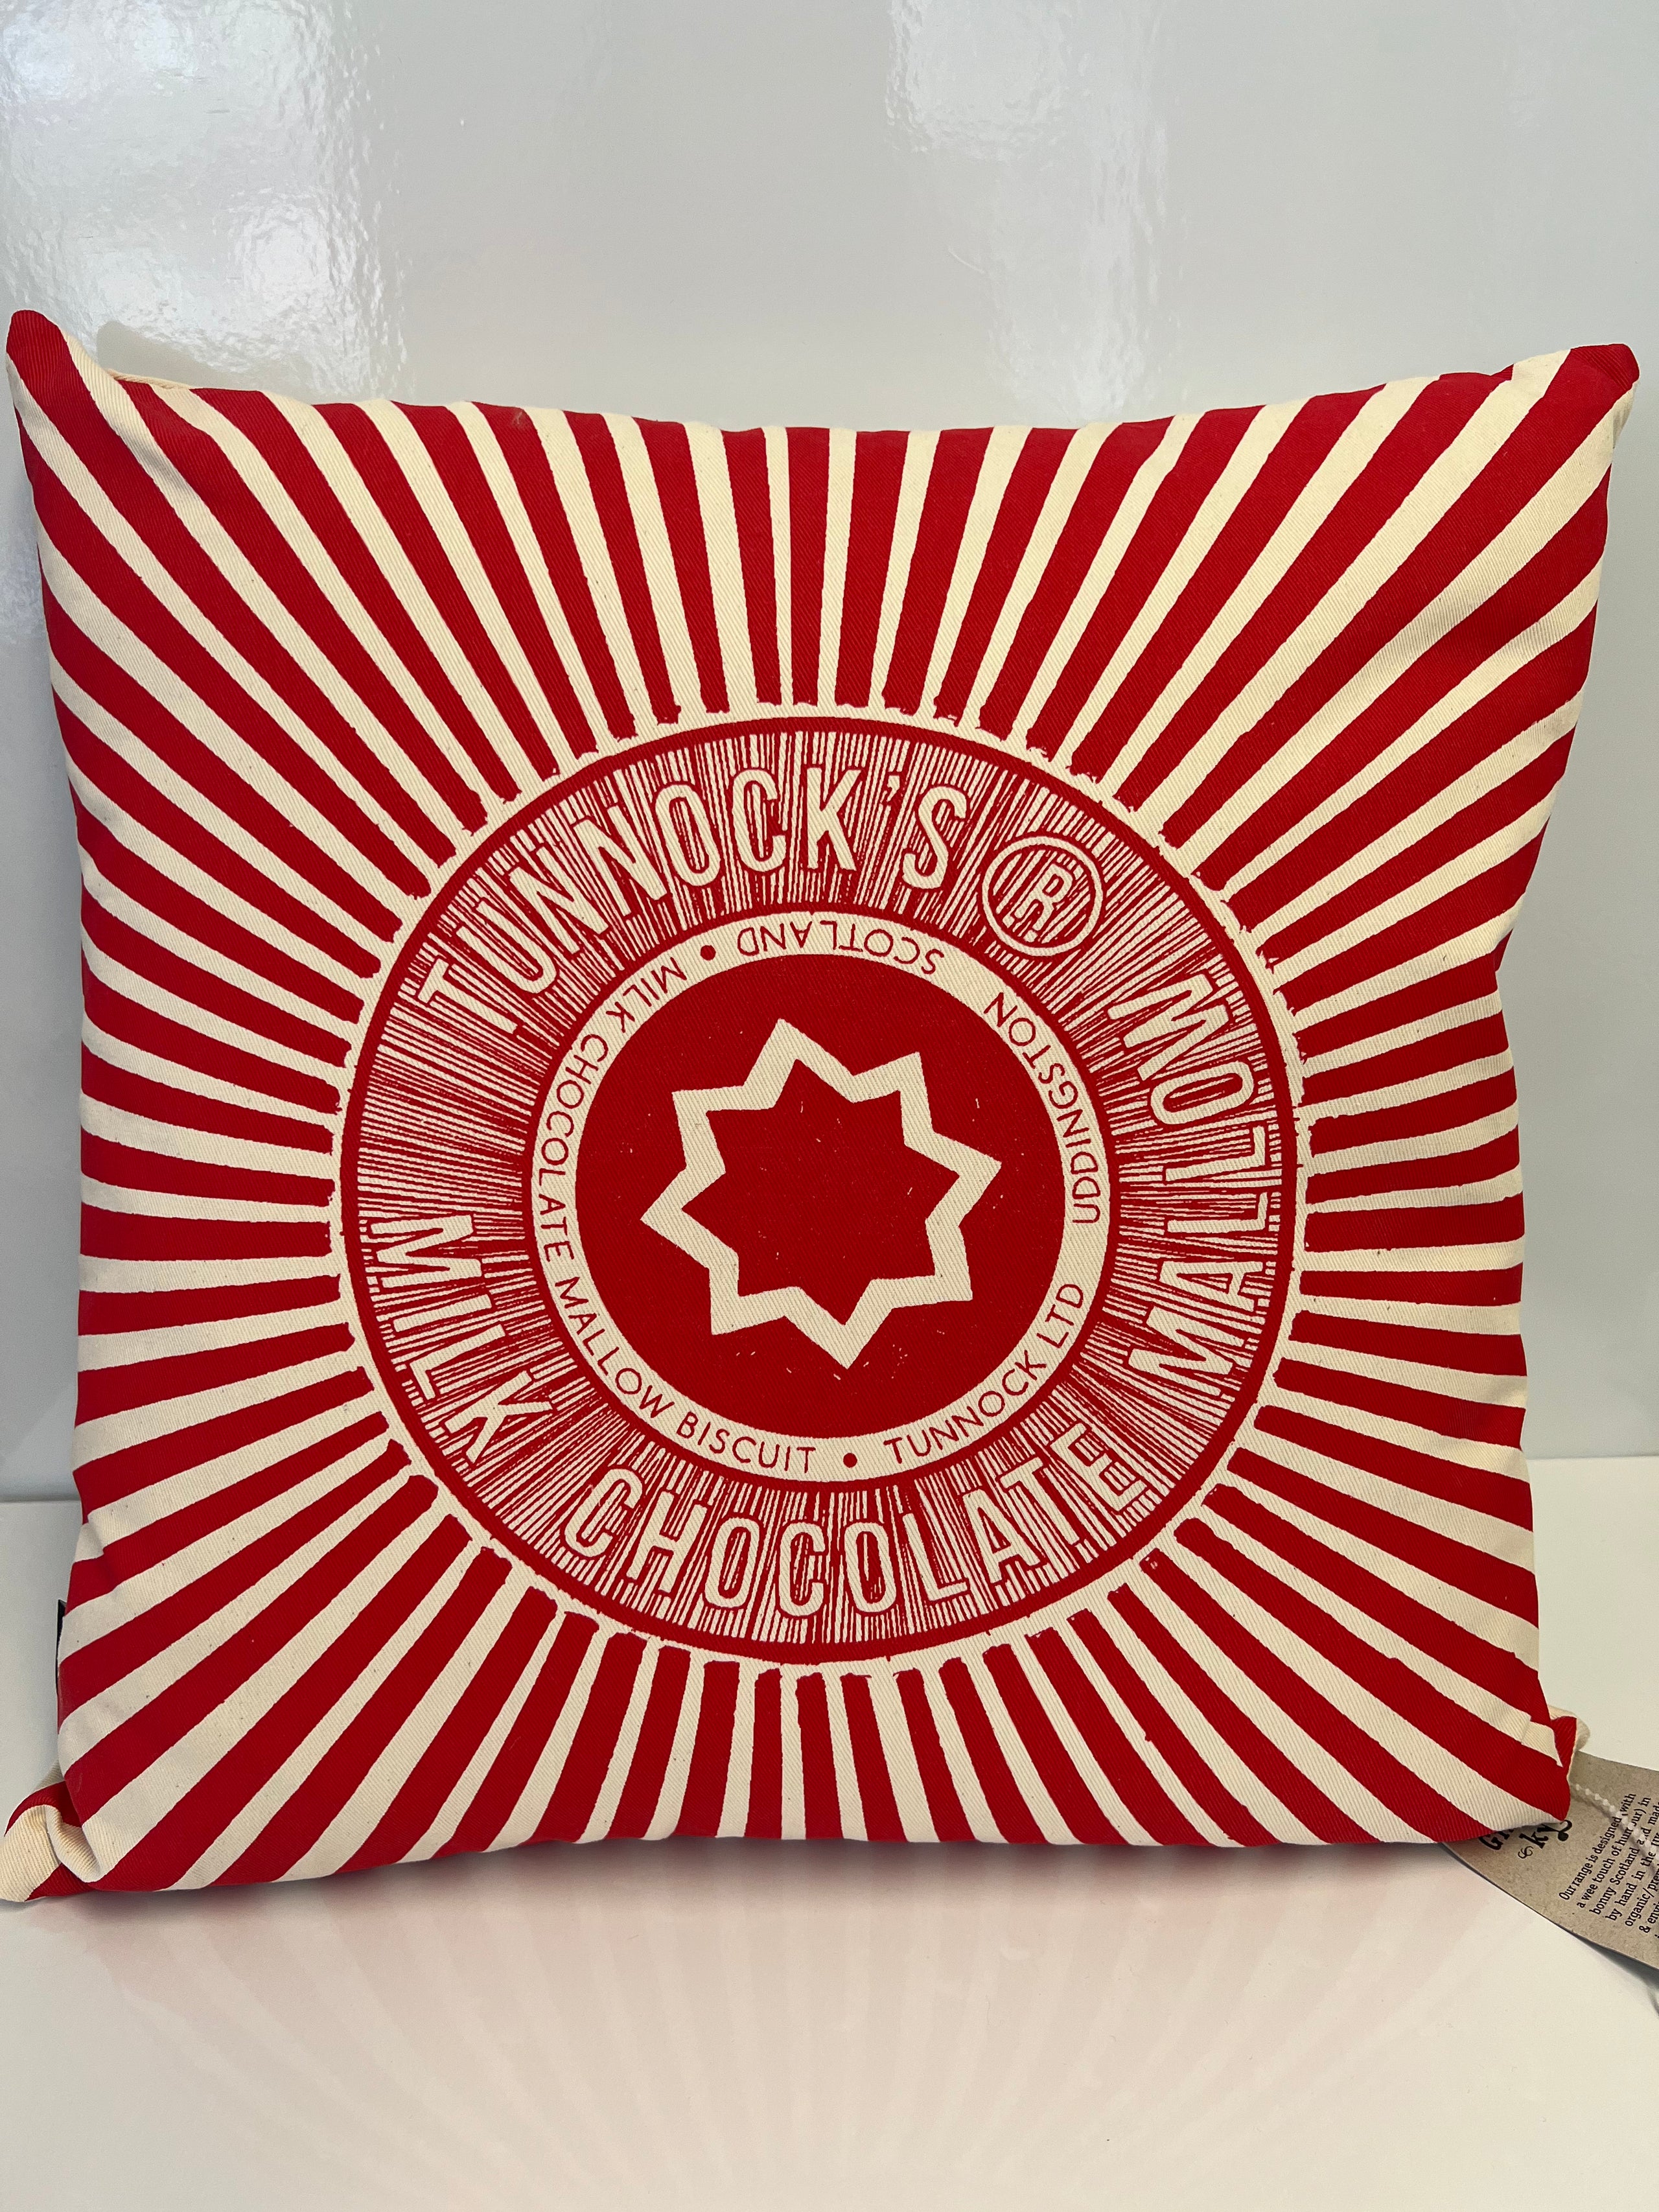 Tunnock’s Teacake Wrapper Cushion